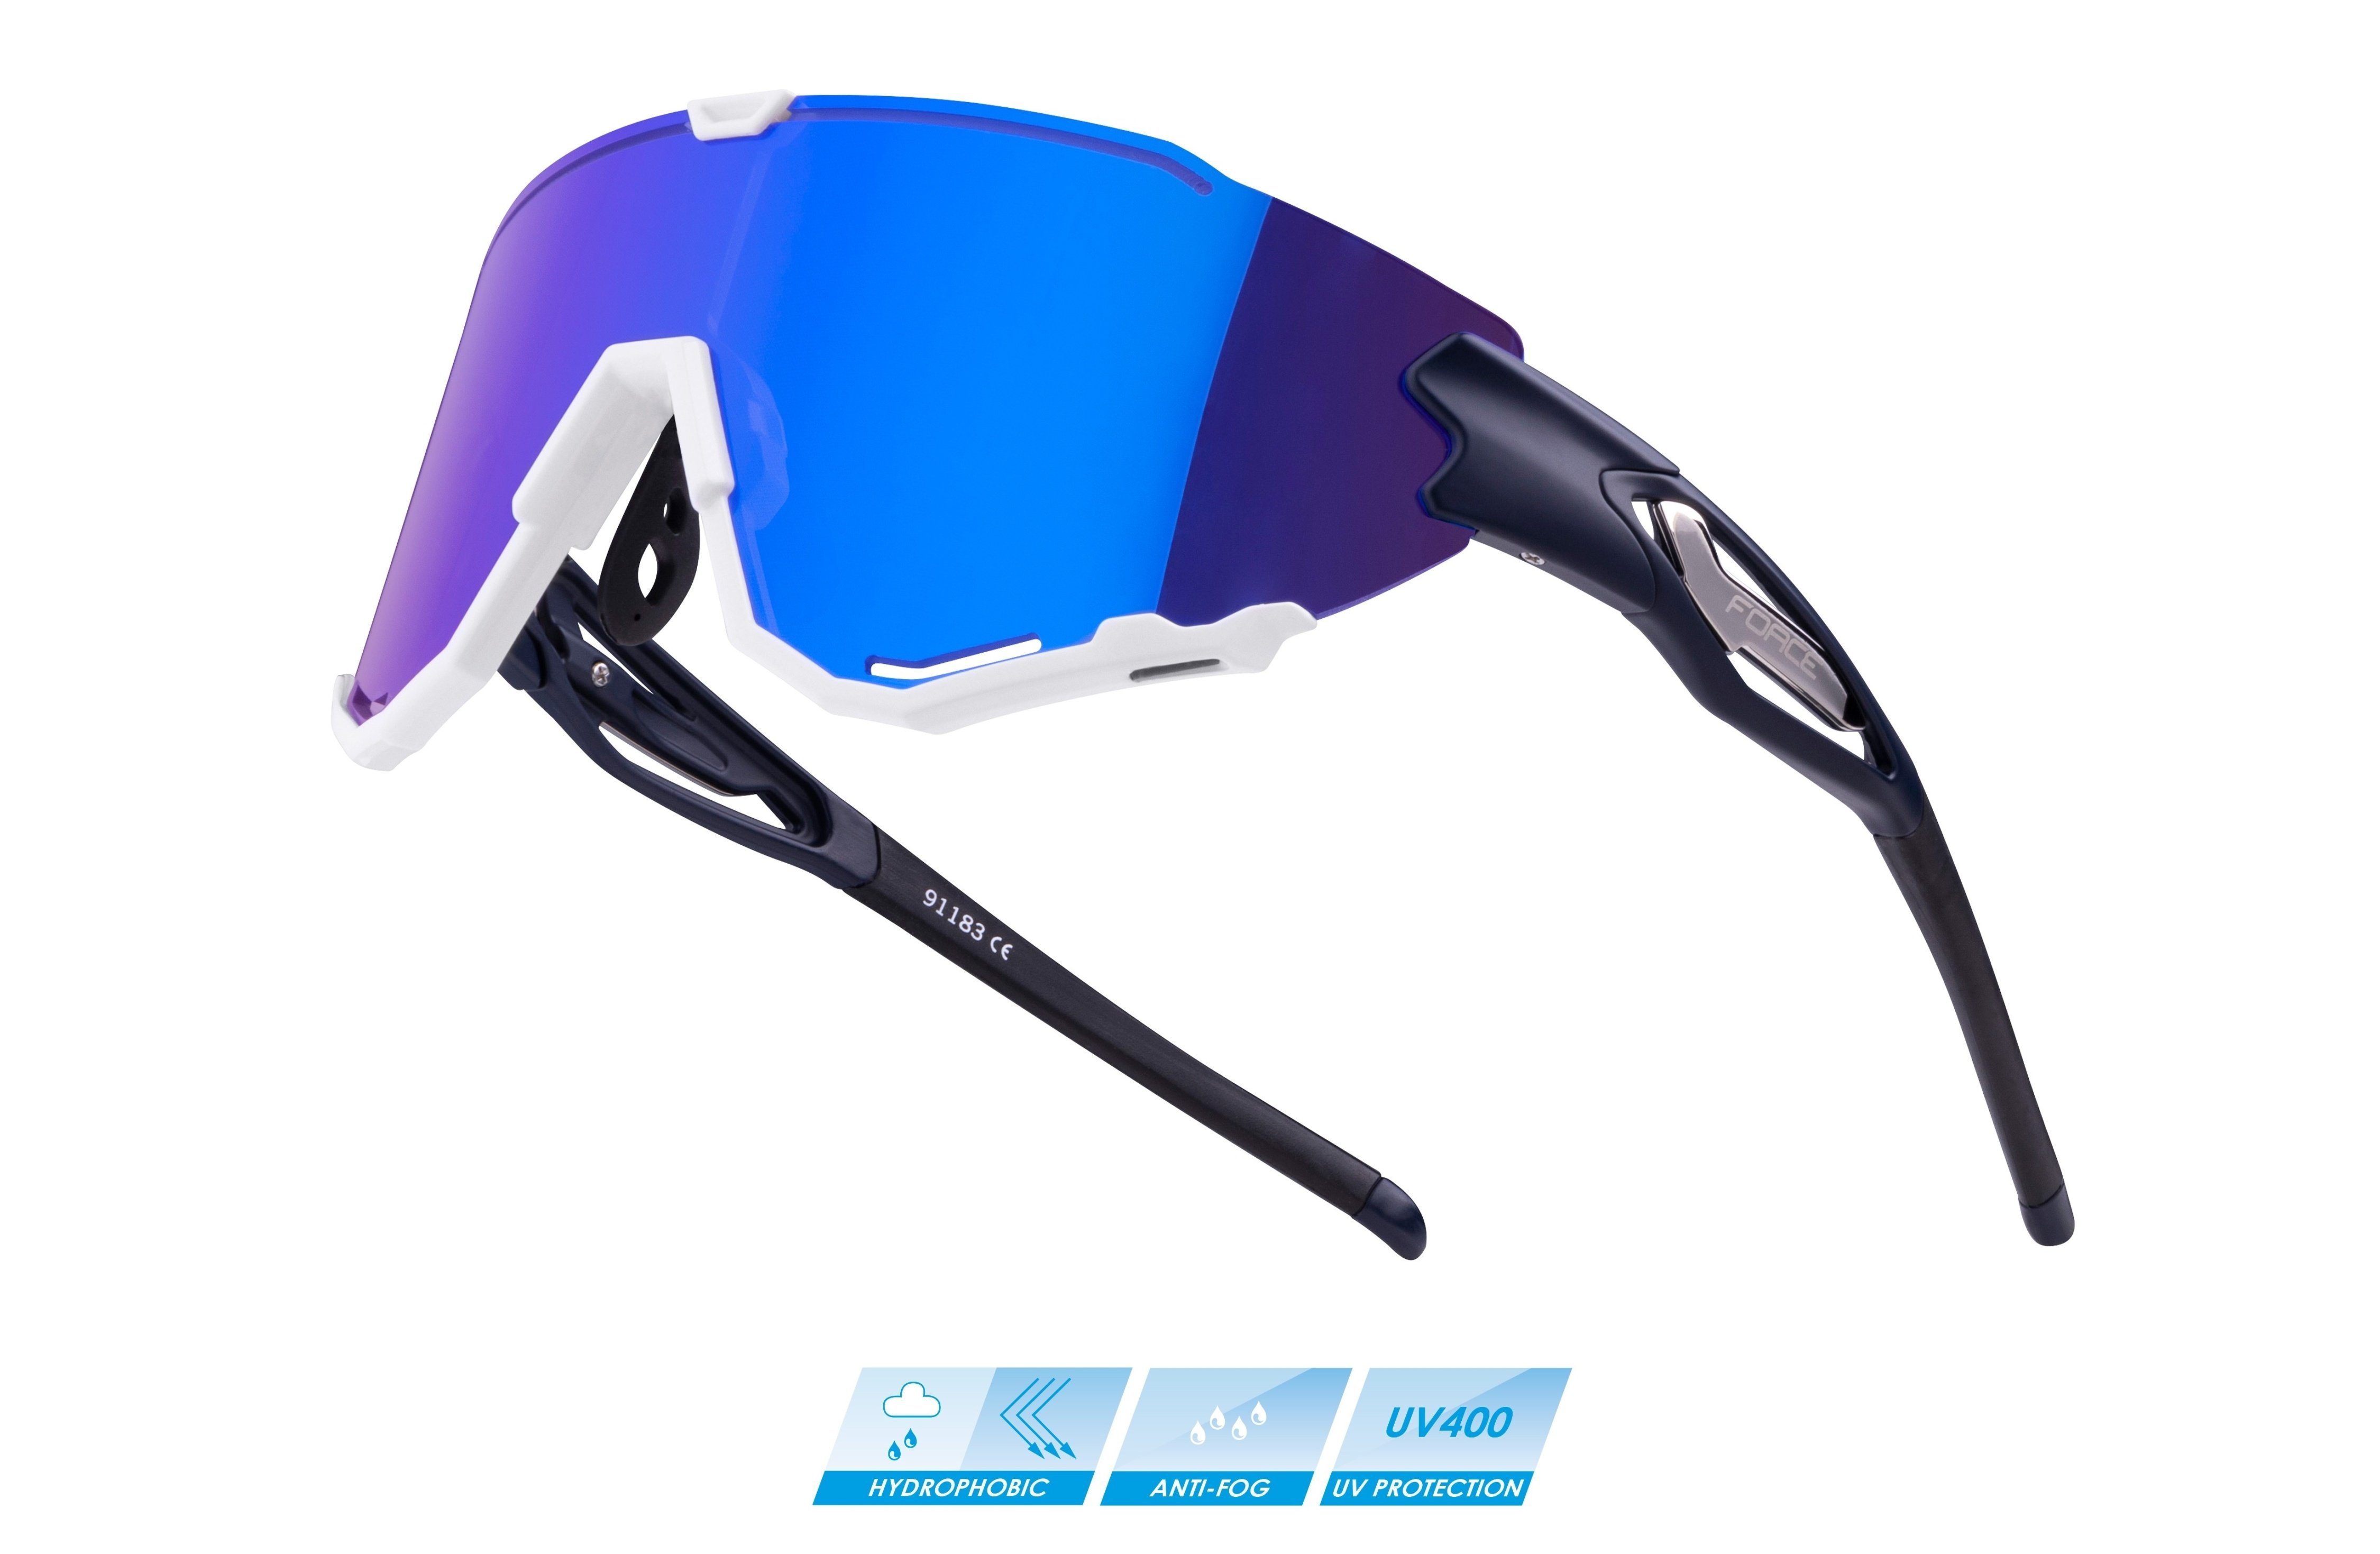 Wechsellinse Sonnenbrille blau FORCE CREED FORCE Fahrradbrille